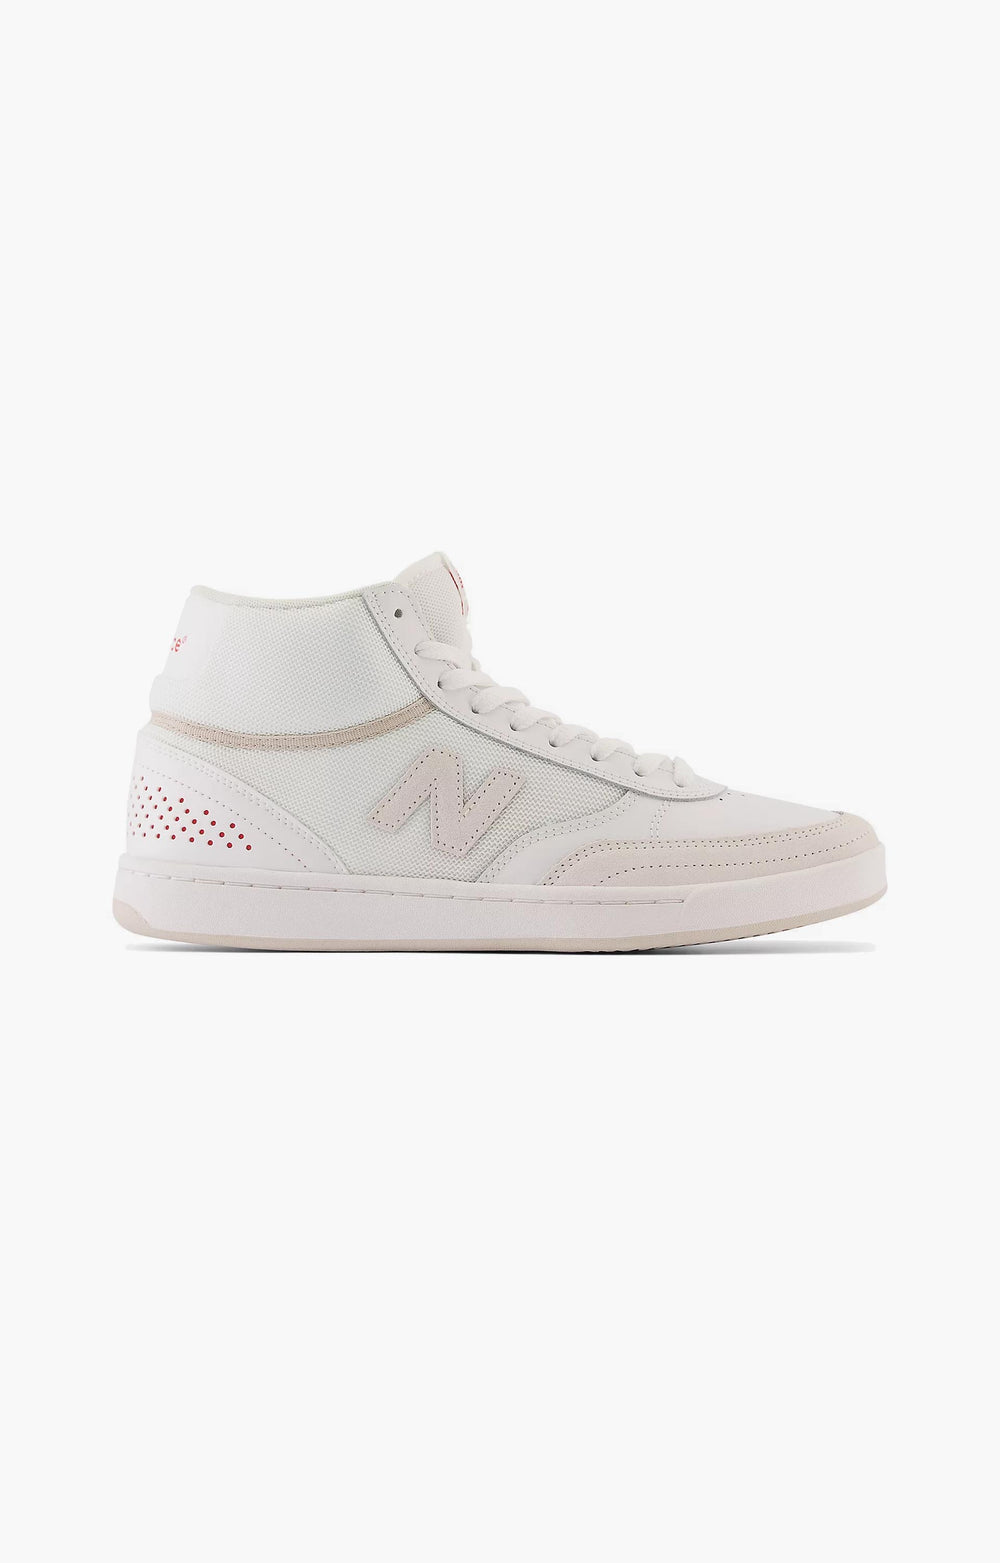 New Balance NM440HPM Shoe, White Grey